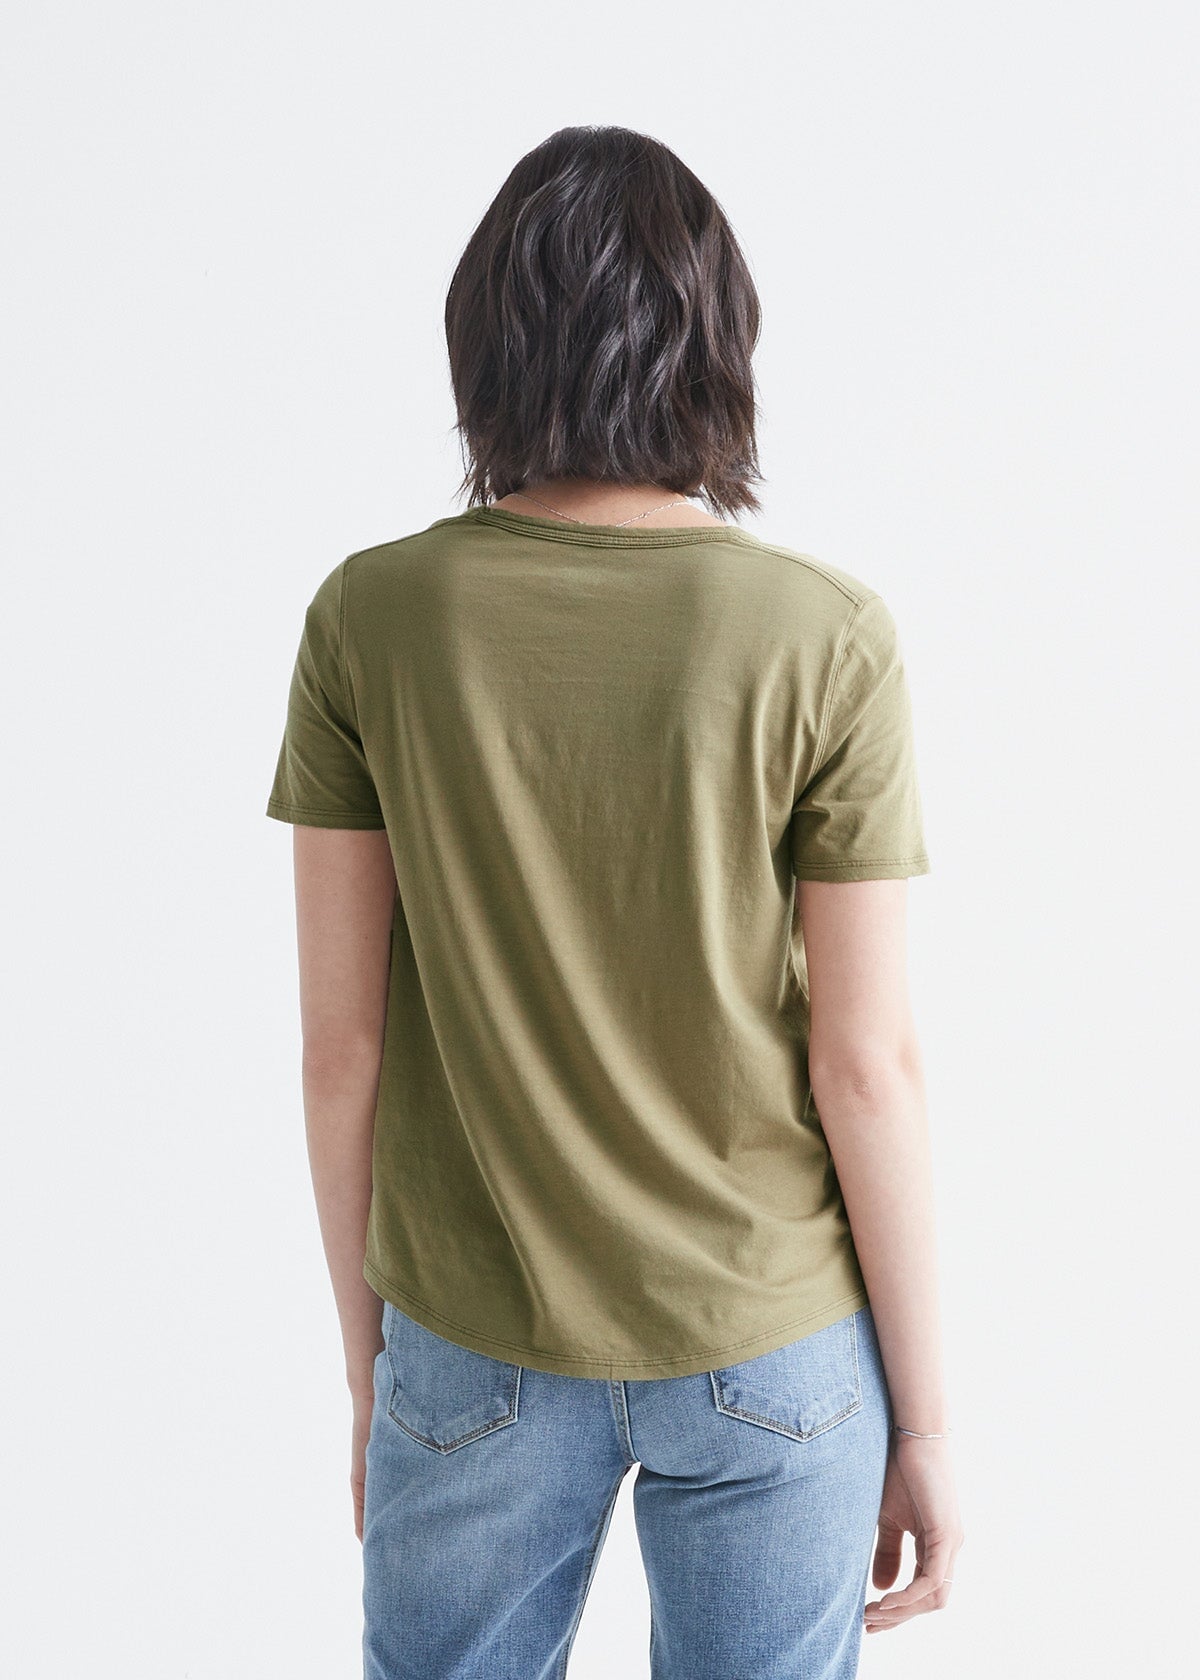 womens soft light-weight olive v-neck t-shirt back